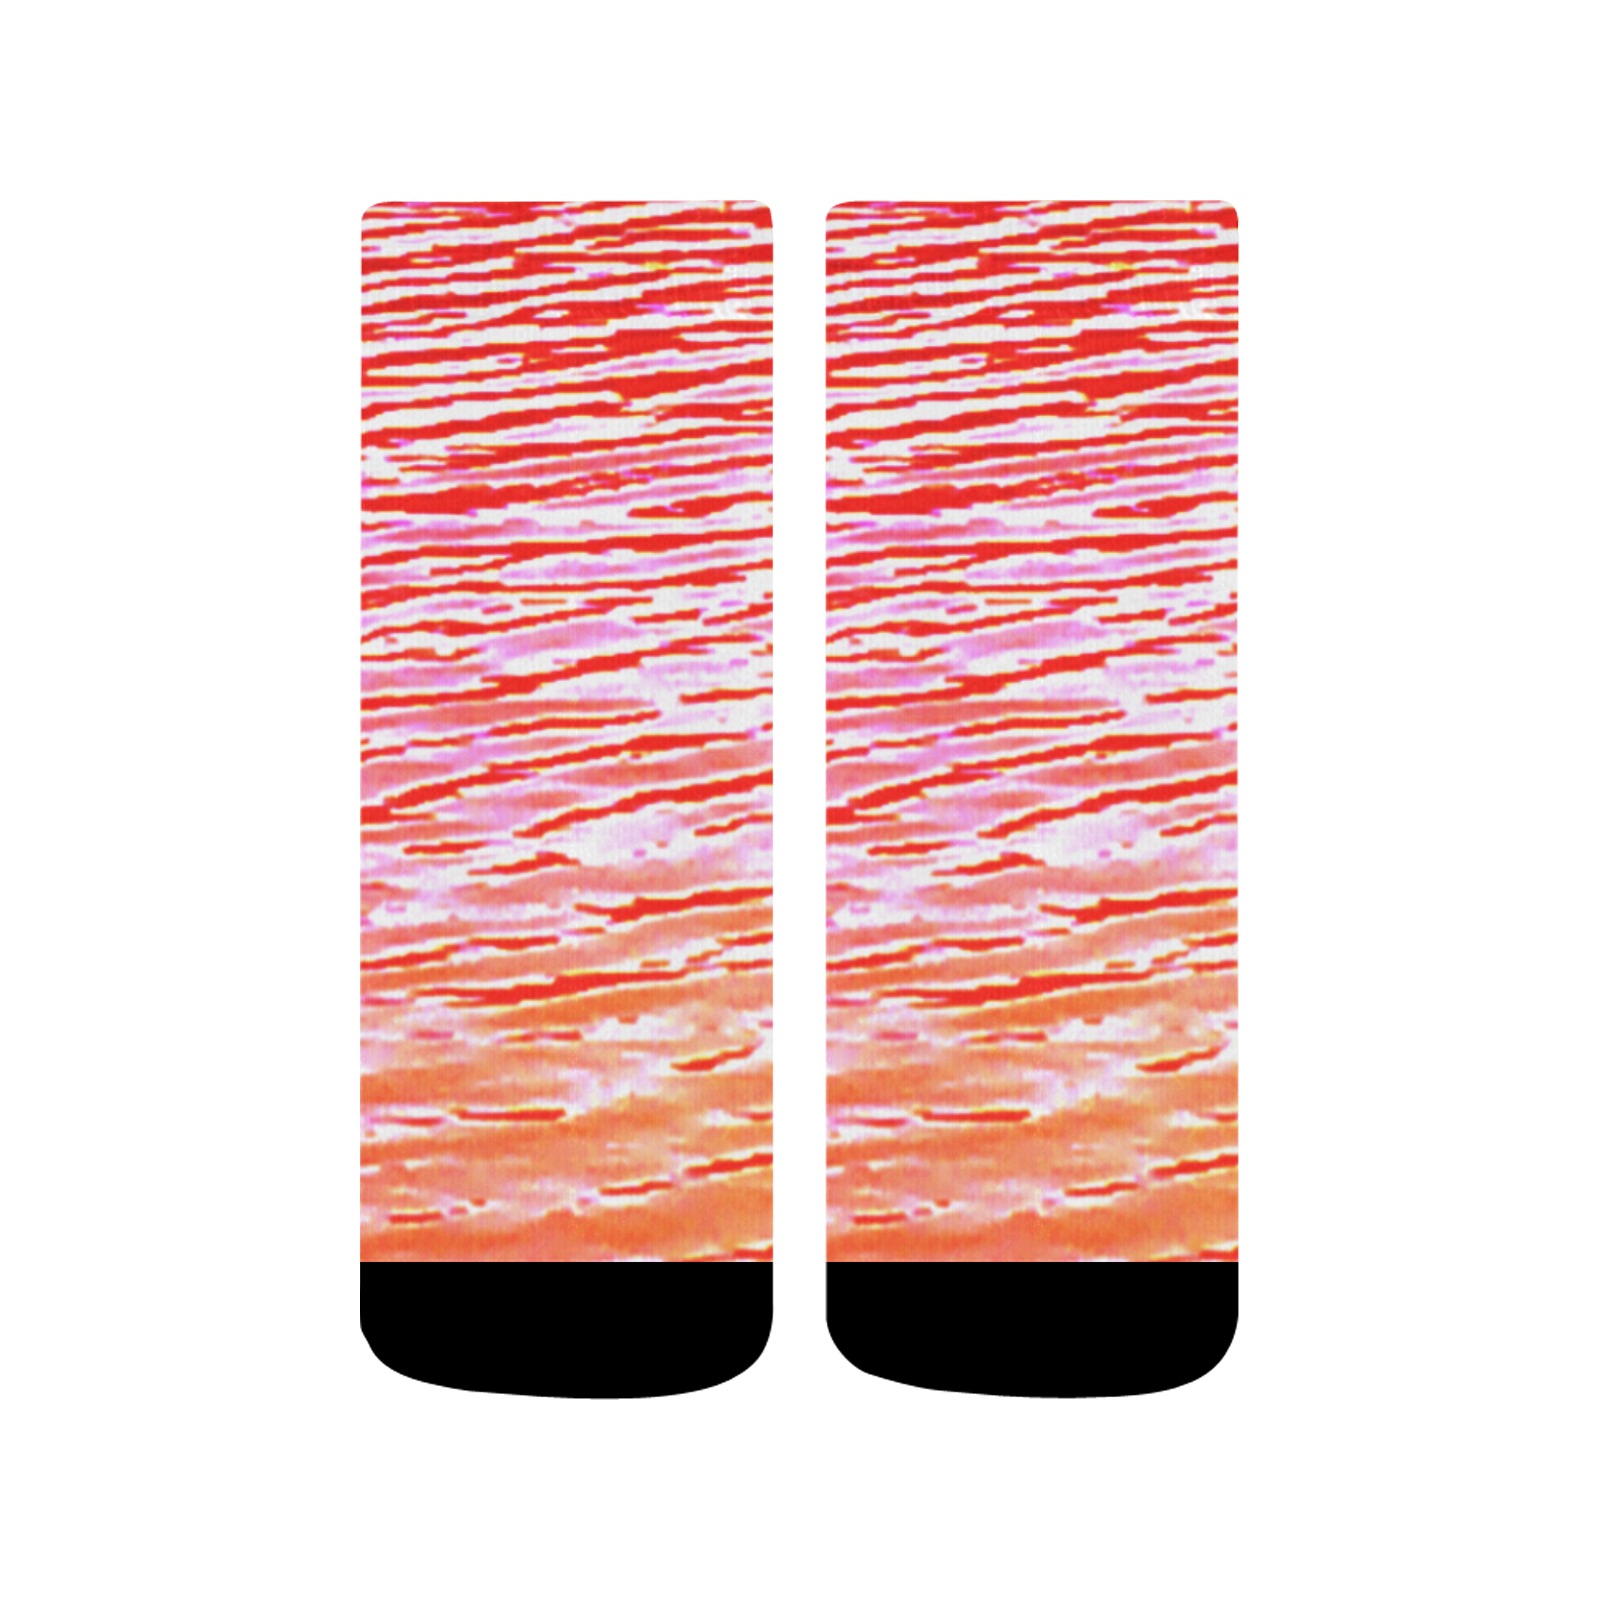 Orange and red water Quarter Socks